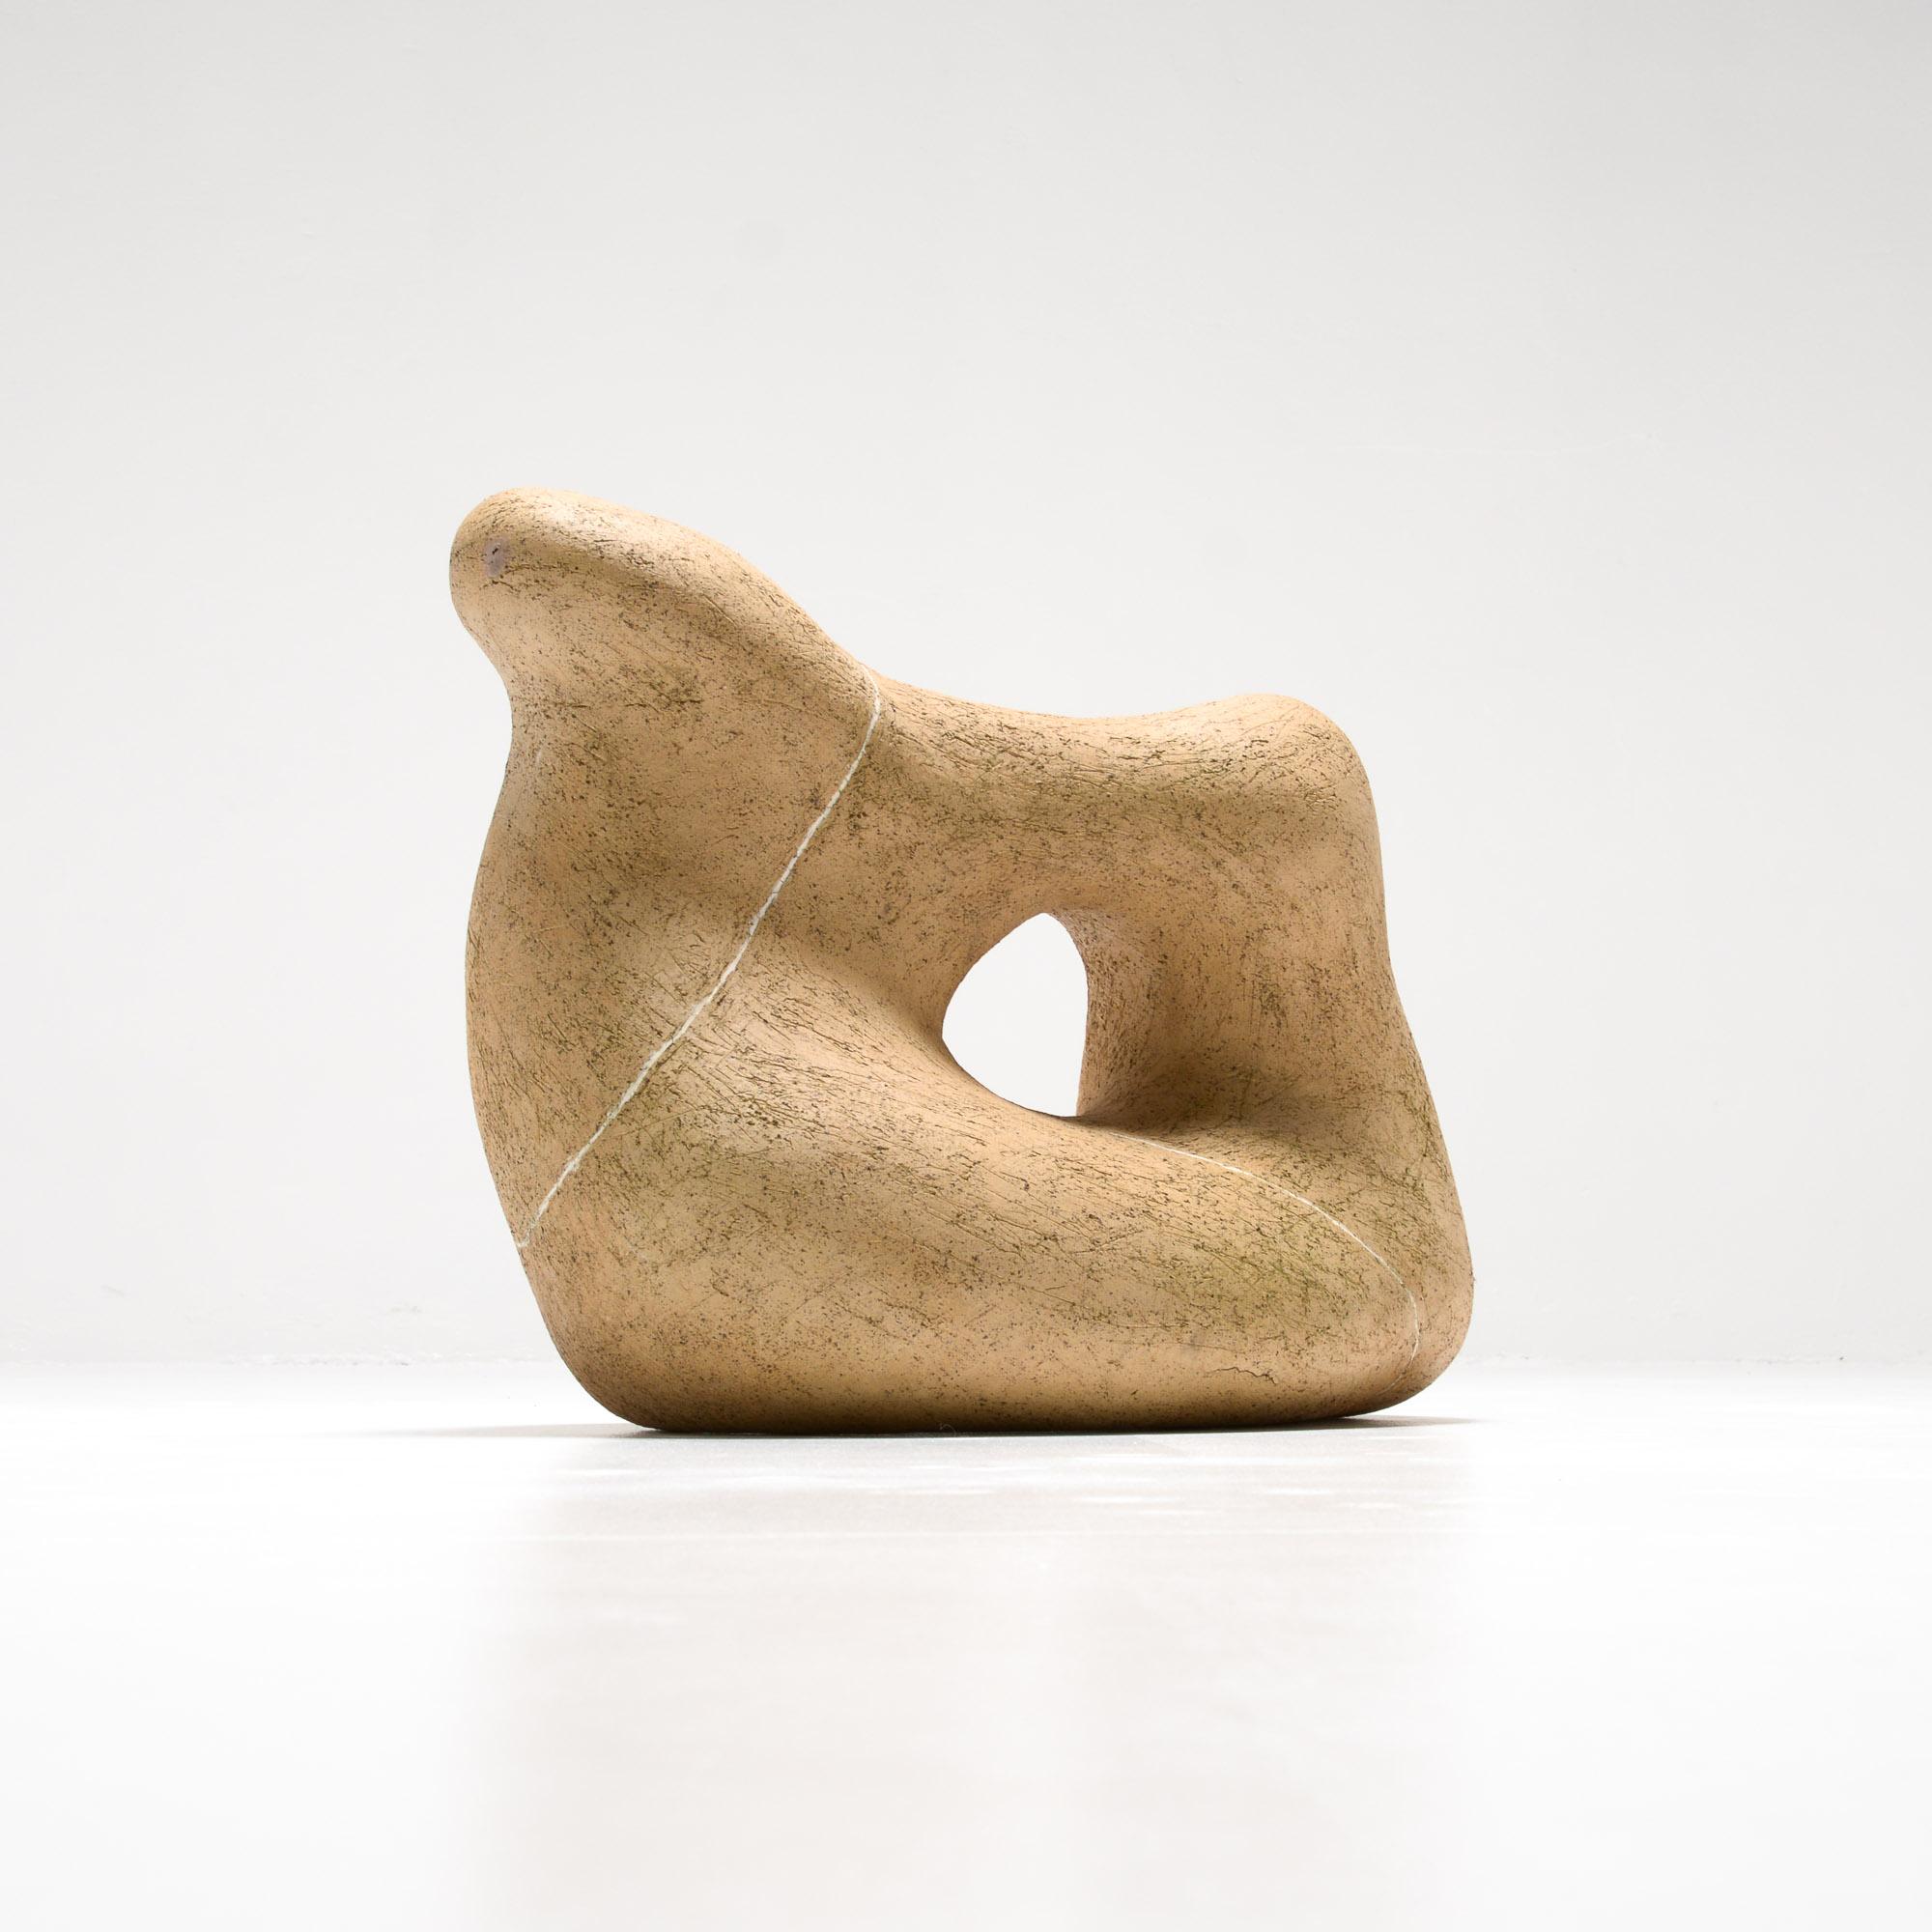 Belgian Large Ceramic Sculpture, Dancing Stone 2, by Sabine Vermetten